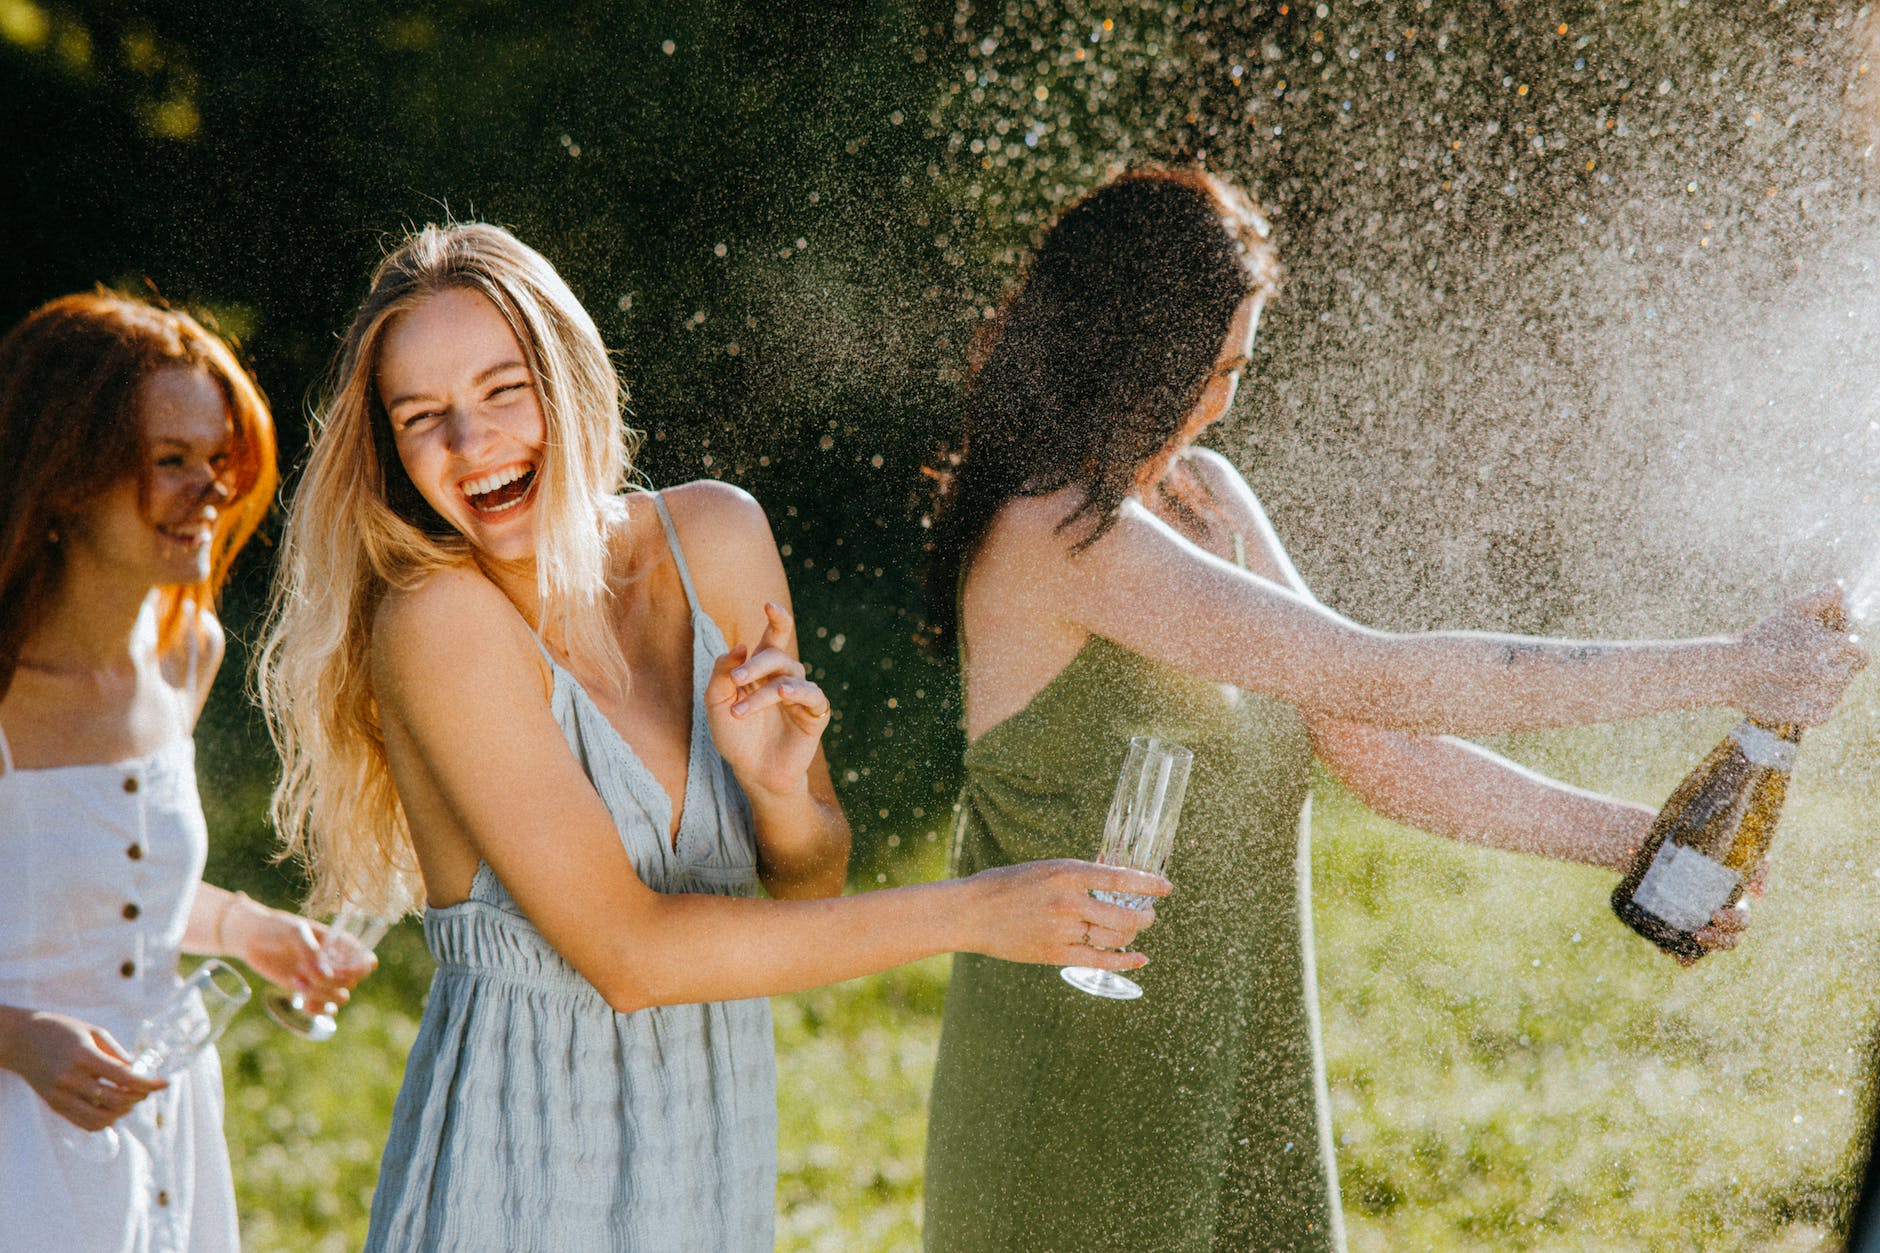 women having fun while splashing liquid from the bottle